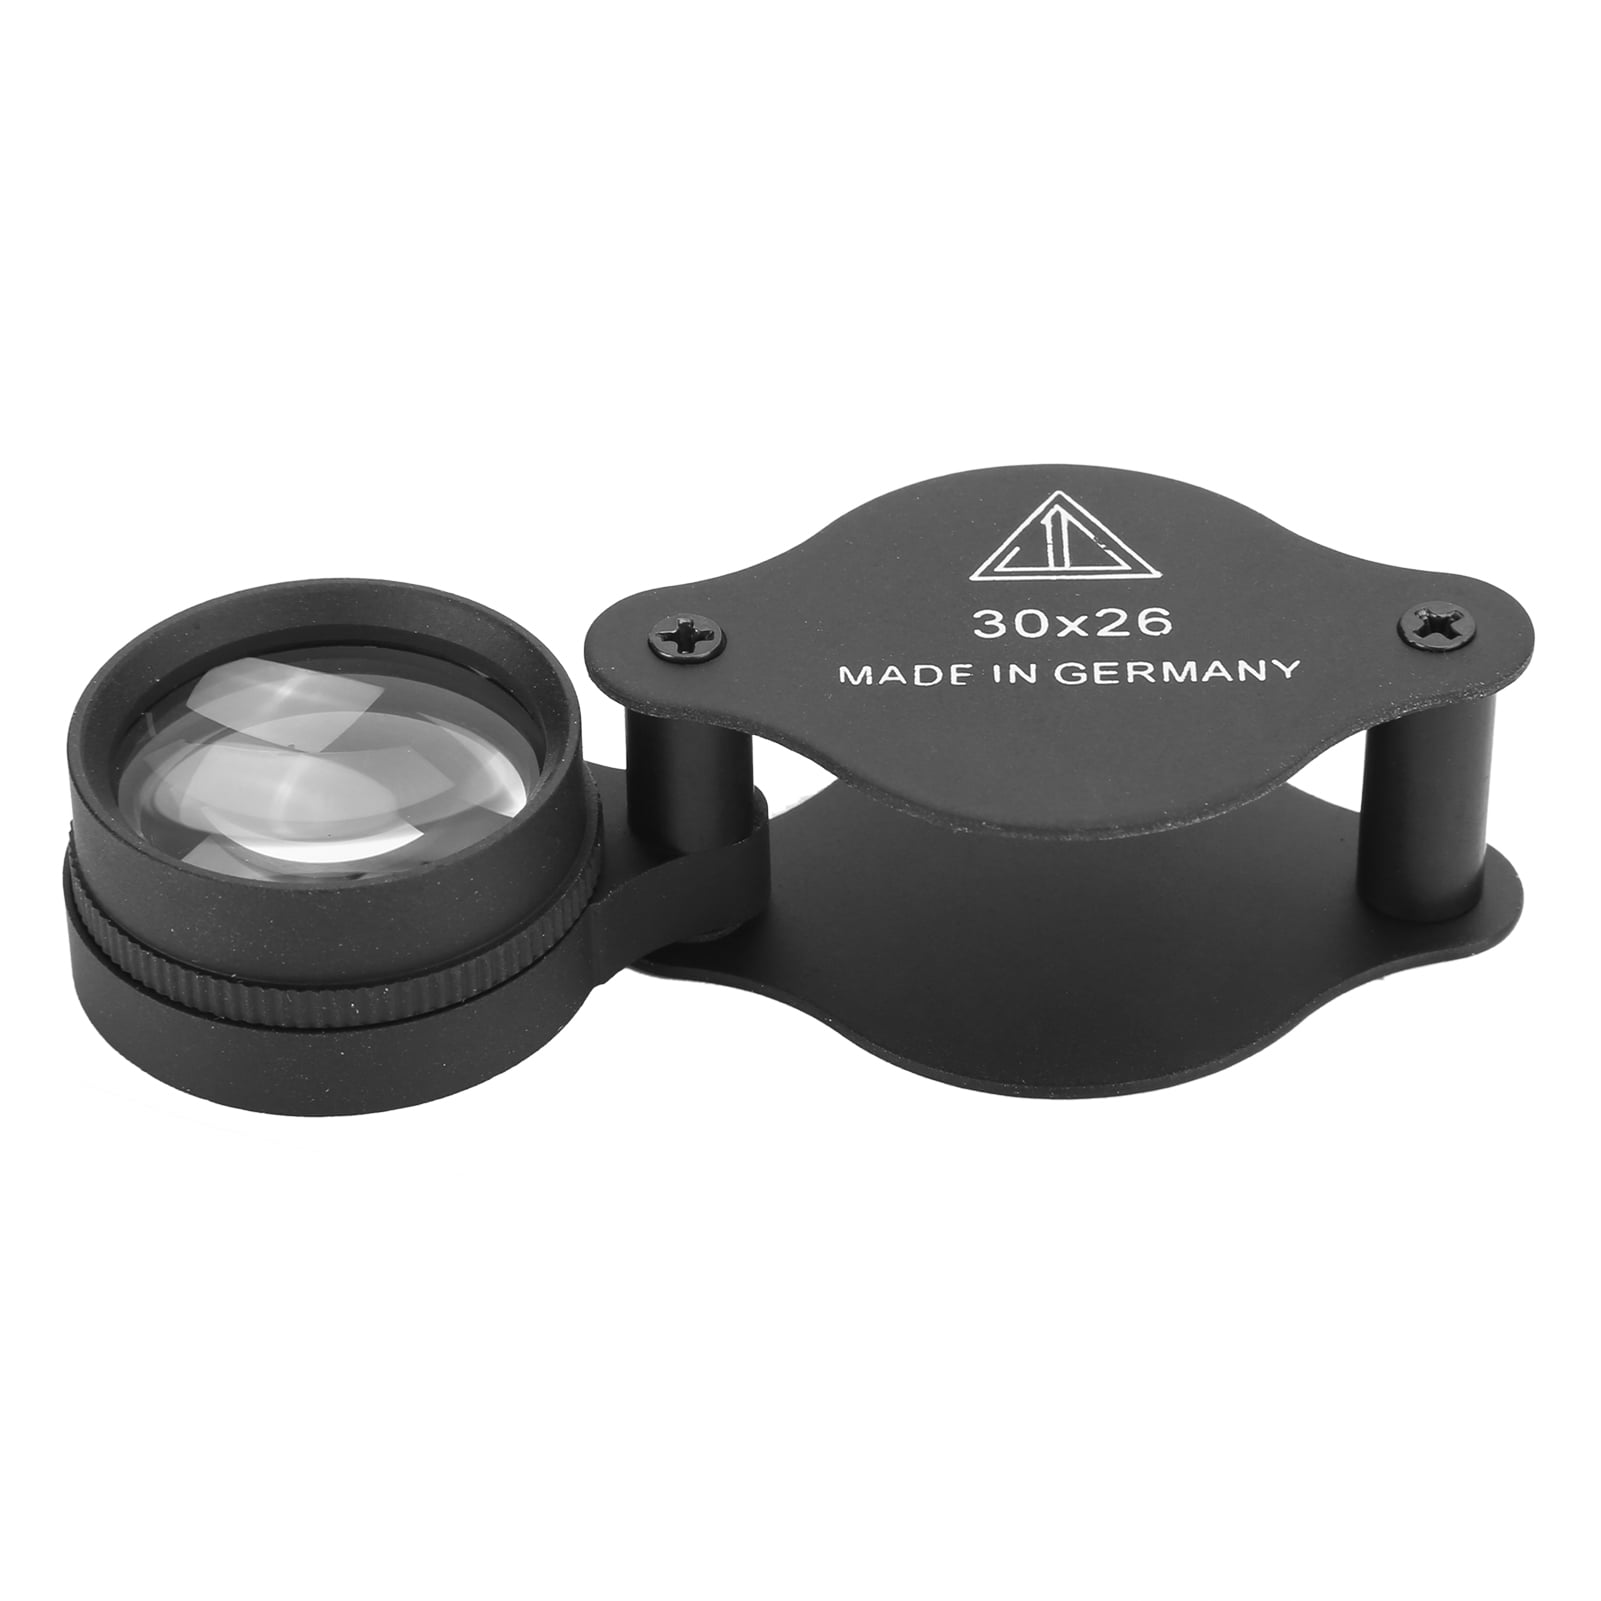 SMALL Folding MAGNIFIER GLASS POCKET SIZE Optical Magnifying Lens Mini Eye Loupe 